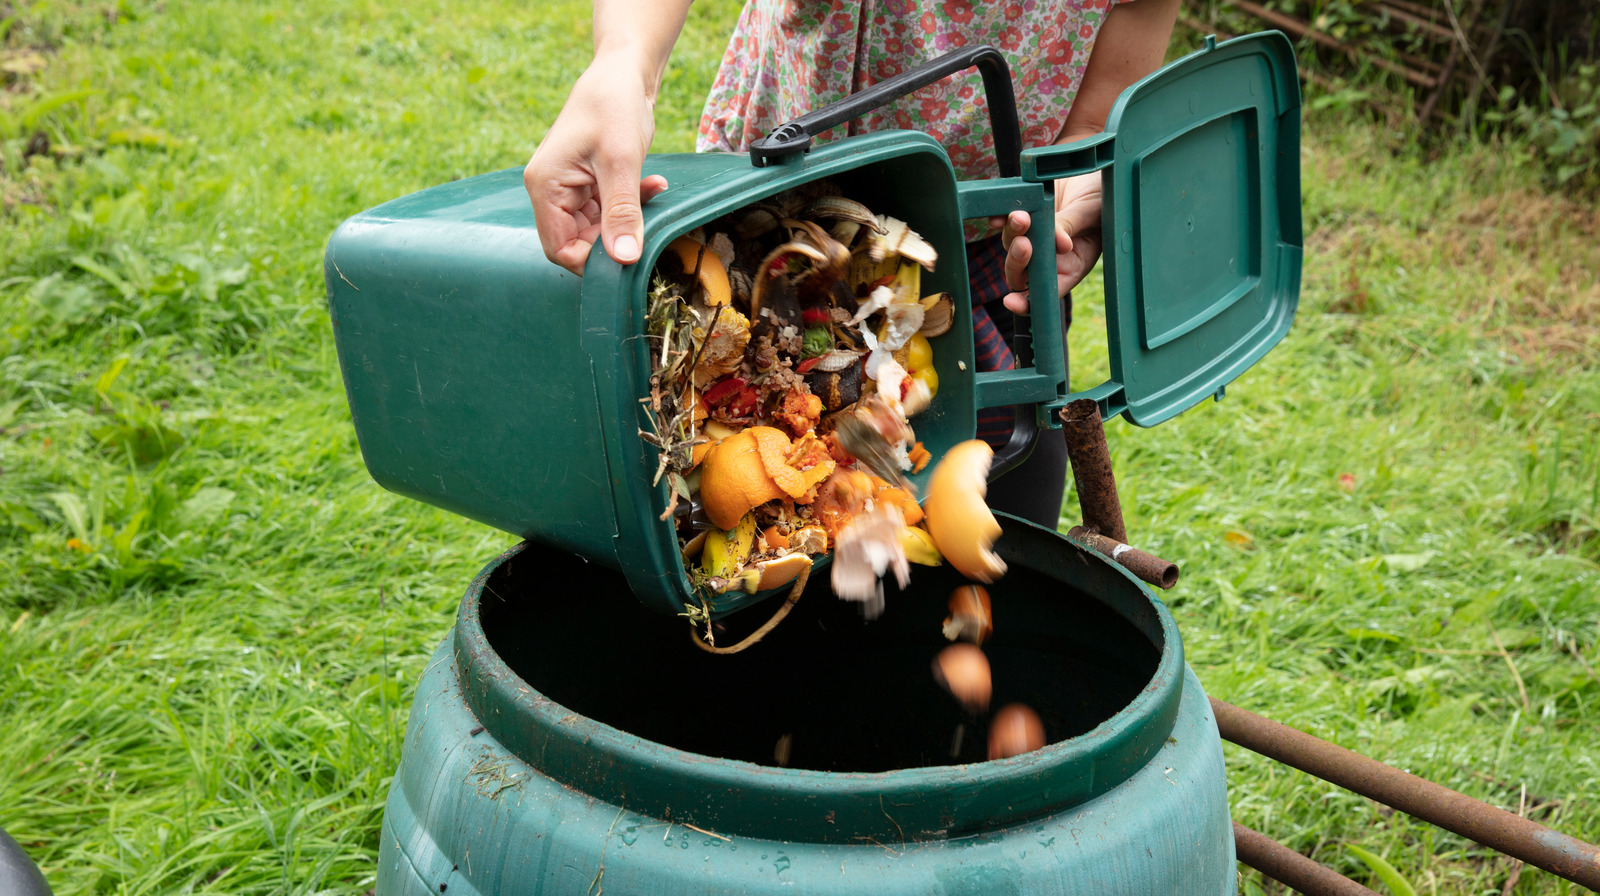 Top 3 Benefits of Composting